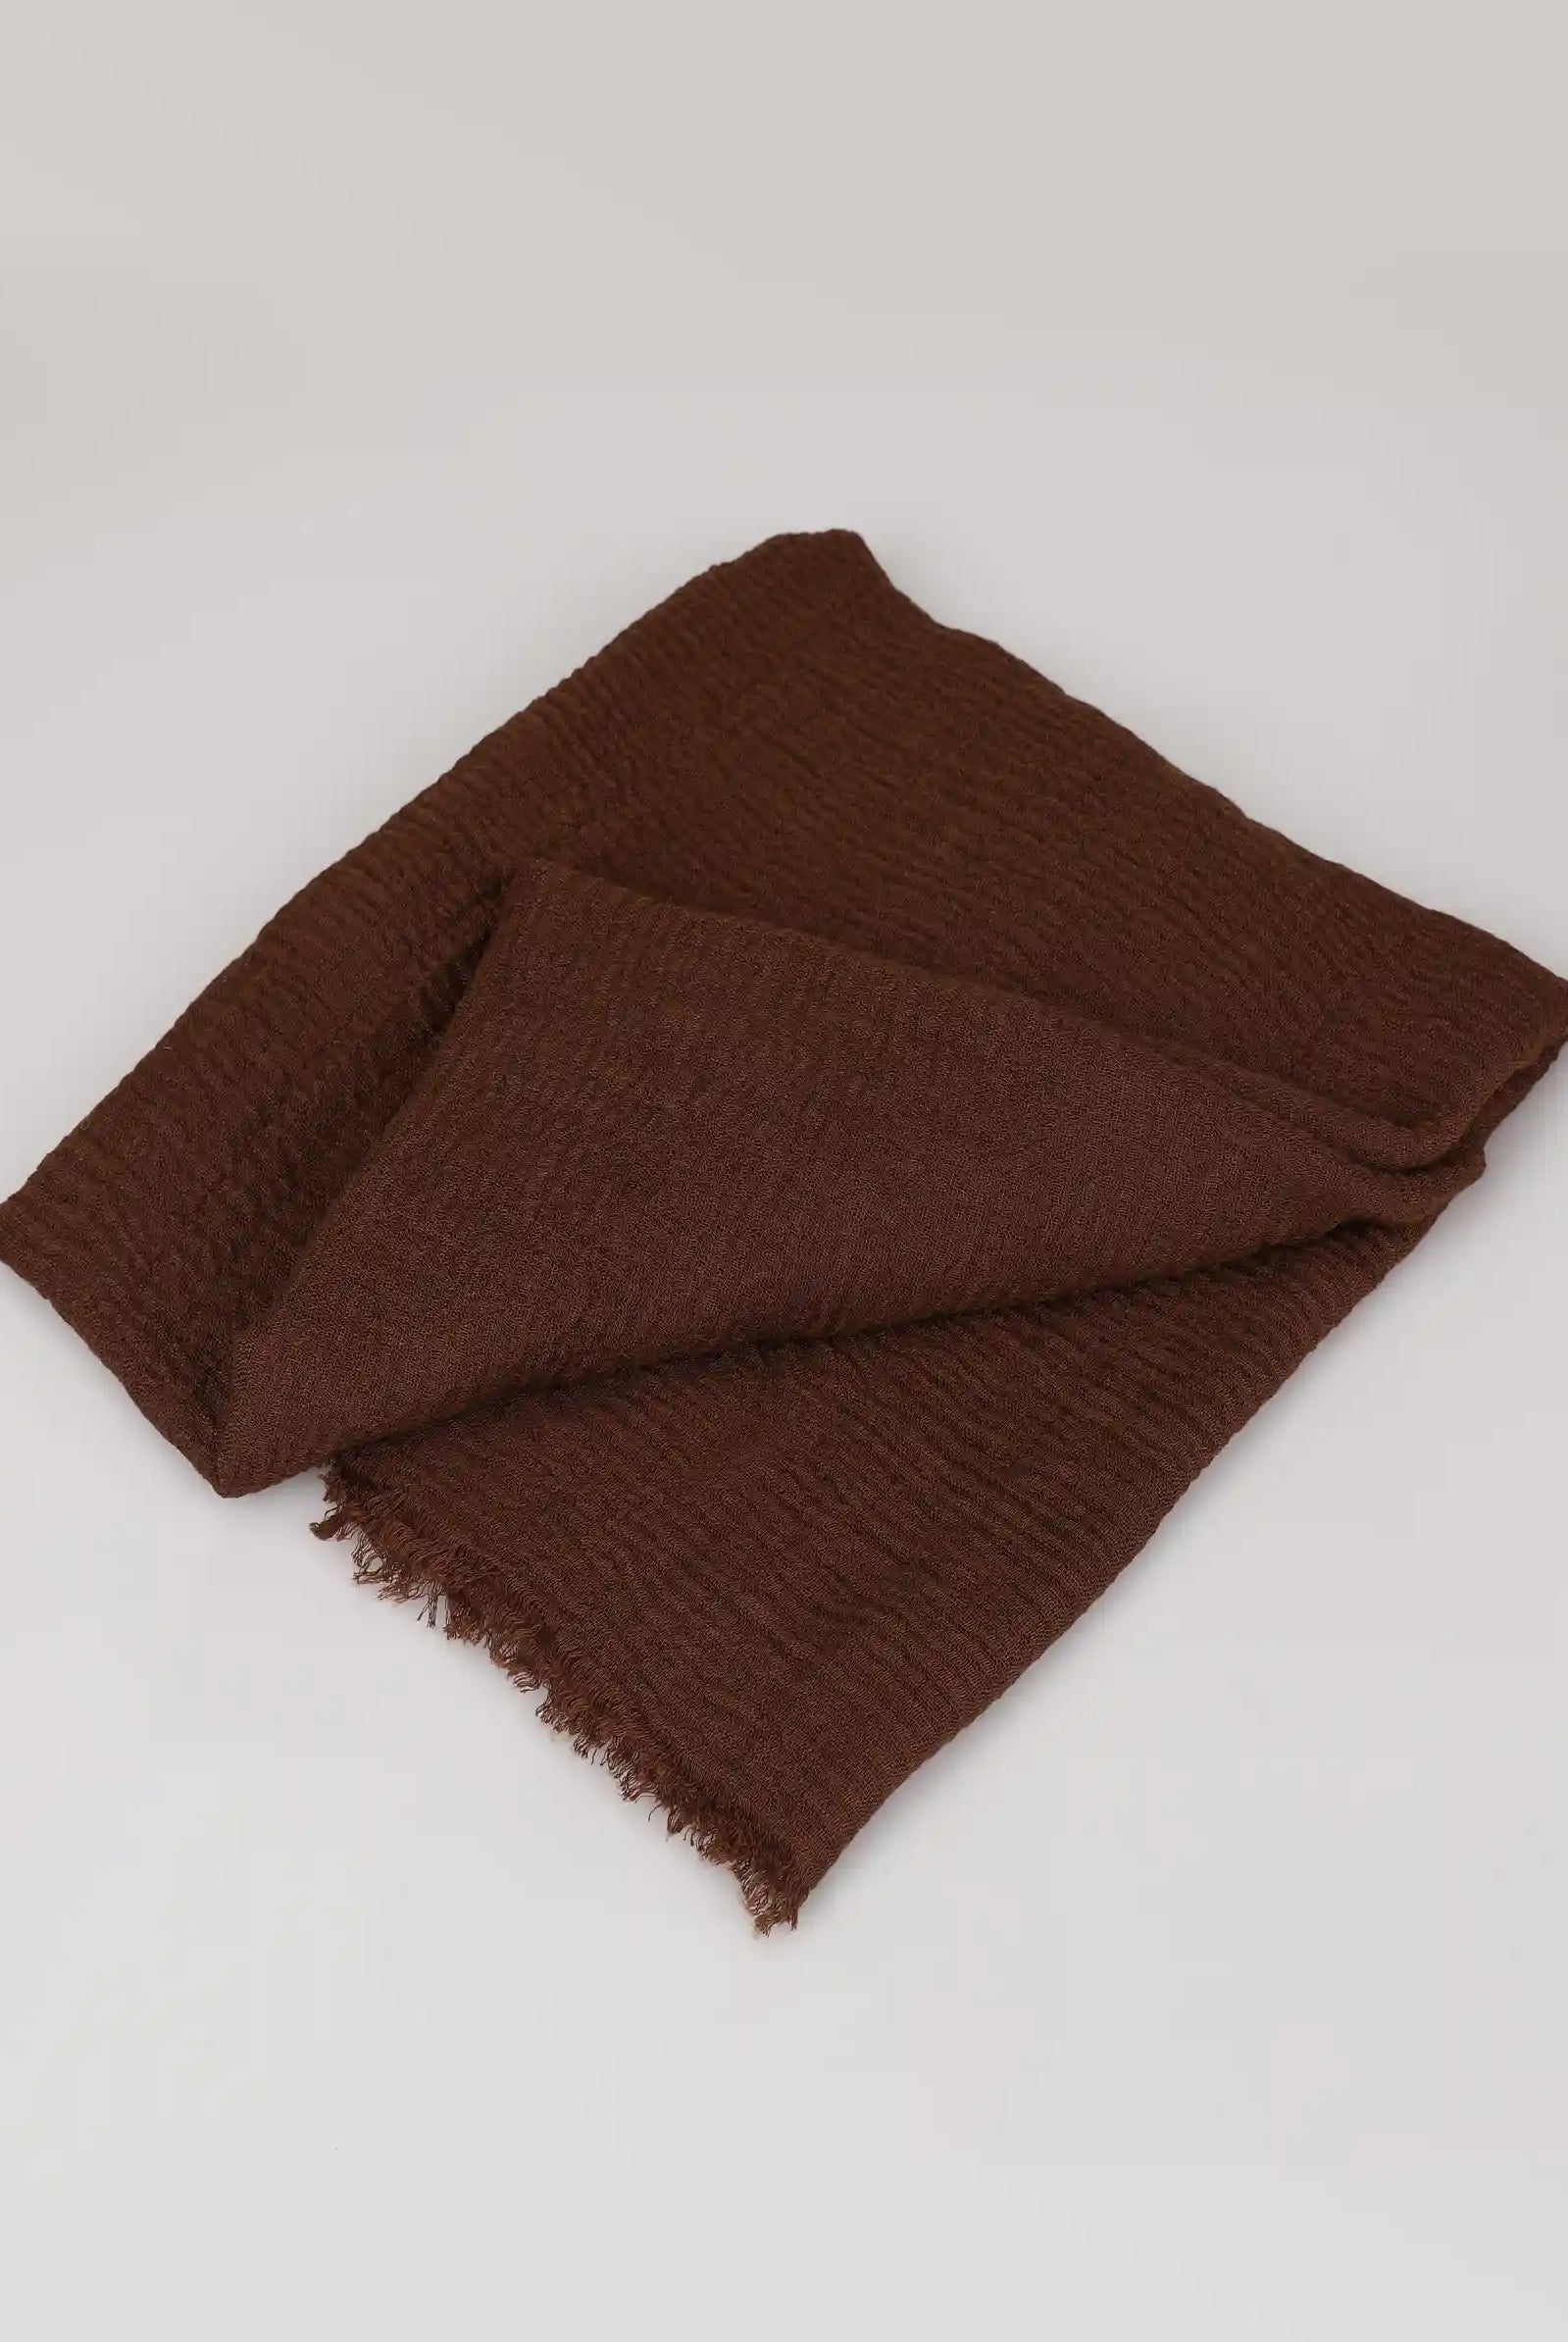 Chocolate brown crinkle scarf